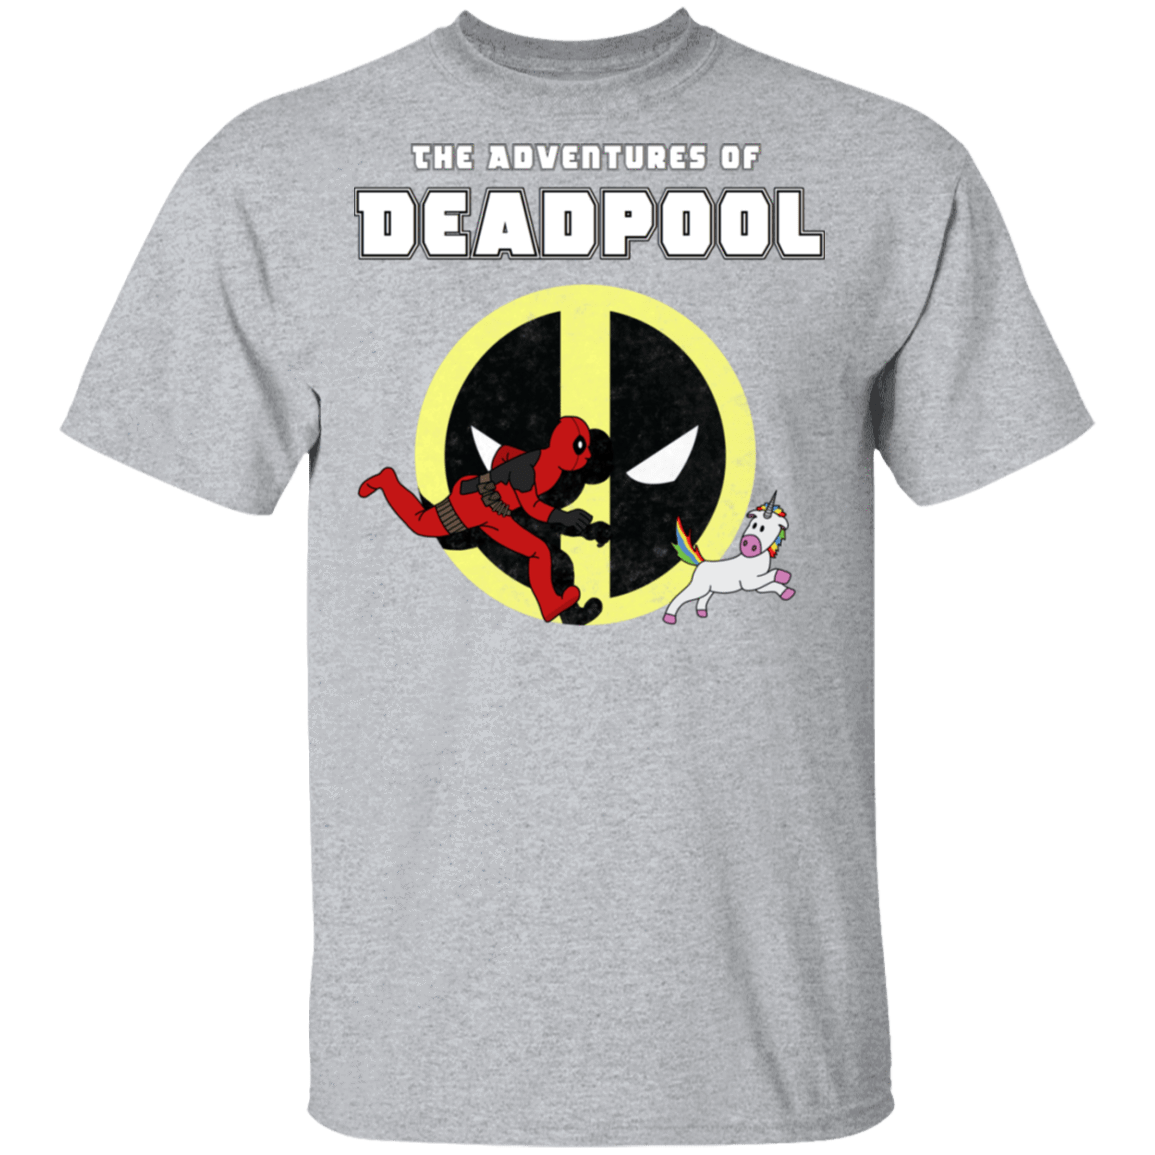 T-Shirts Sport Grey / S The Adventures Of Deadpool T-Shirt